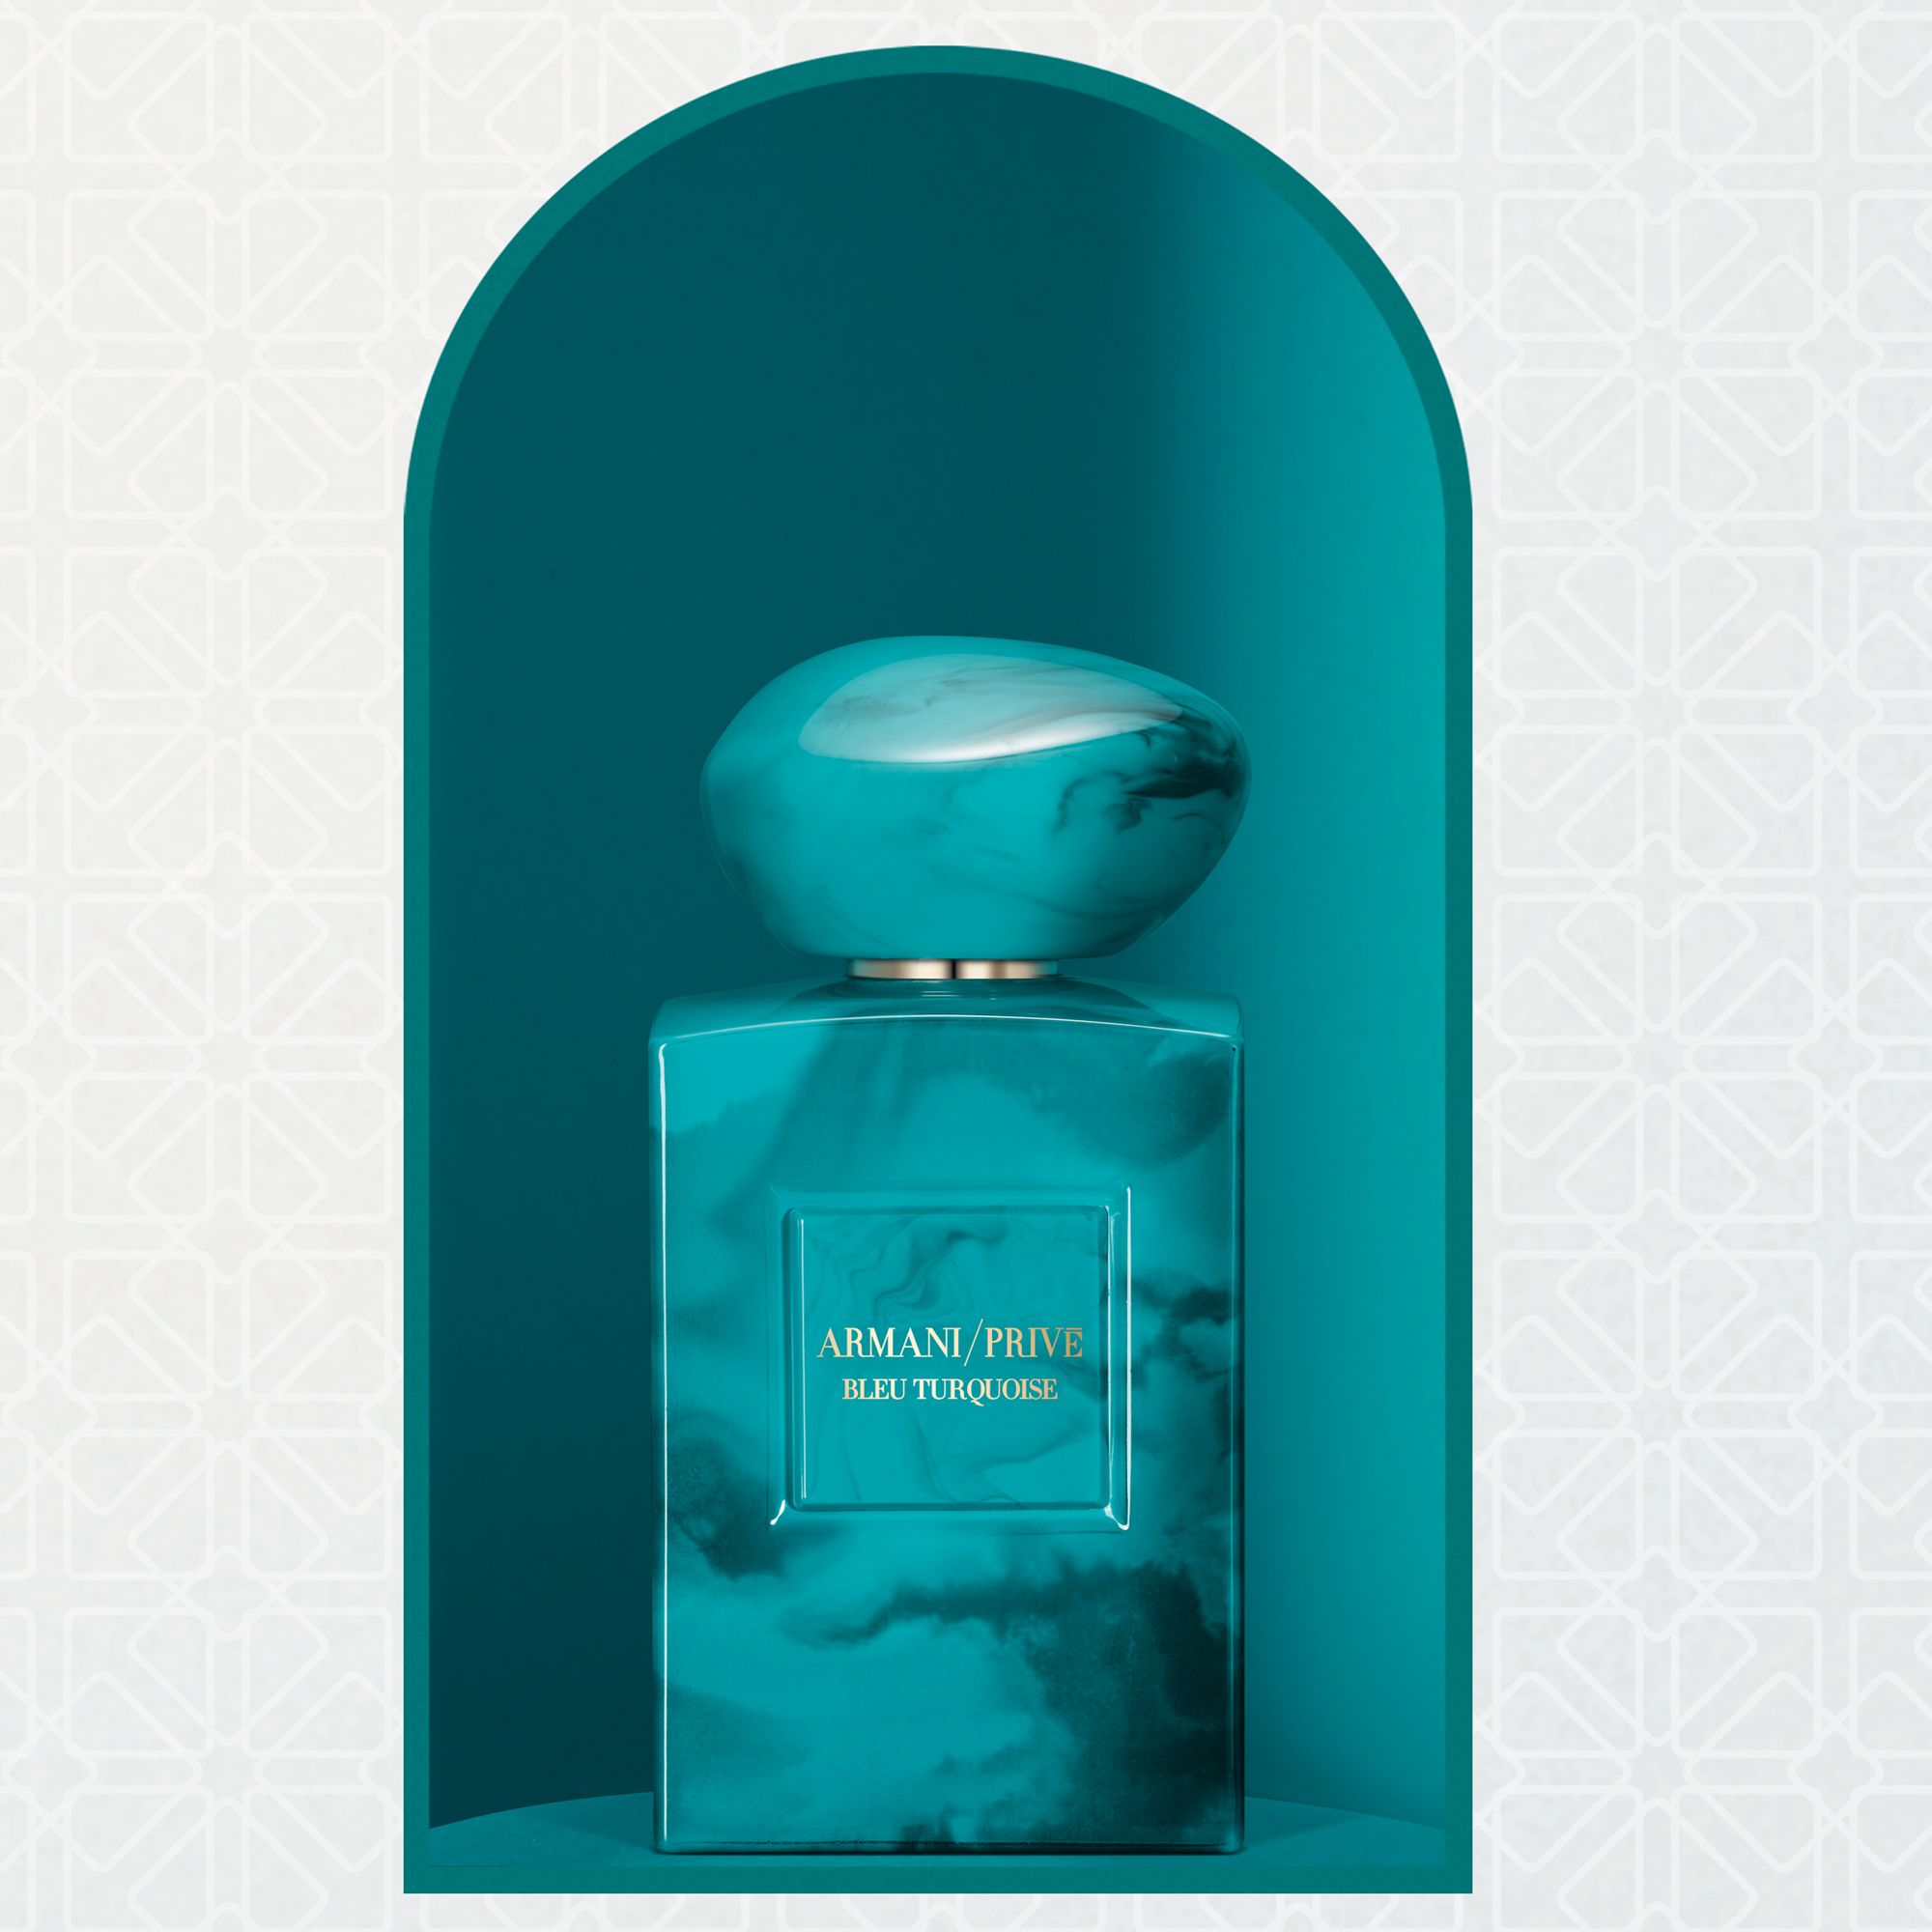 armani turquoise perfume